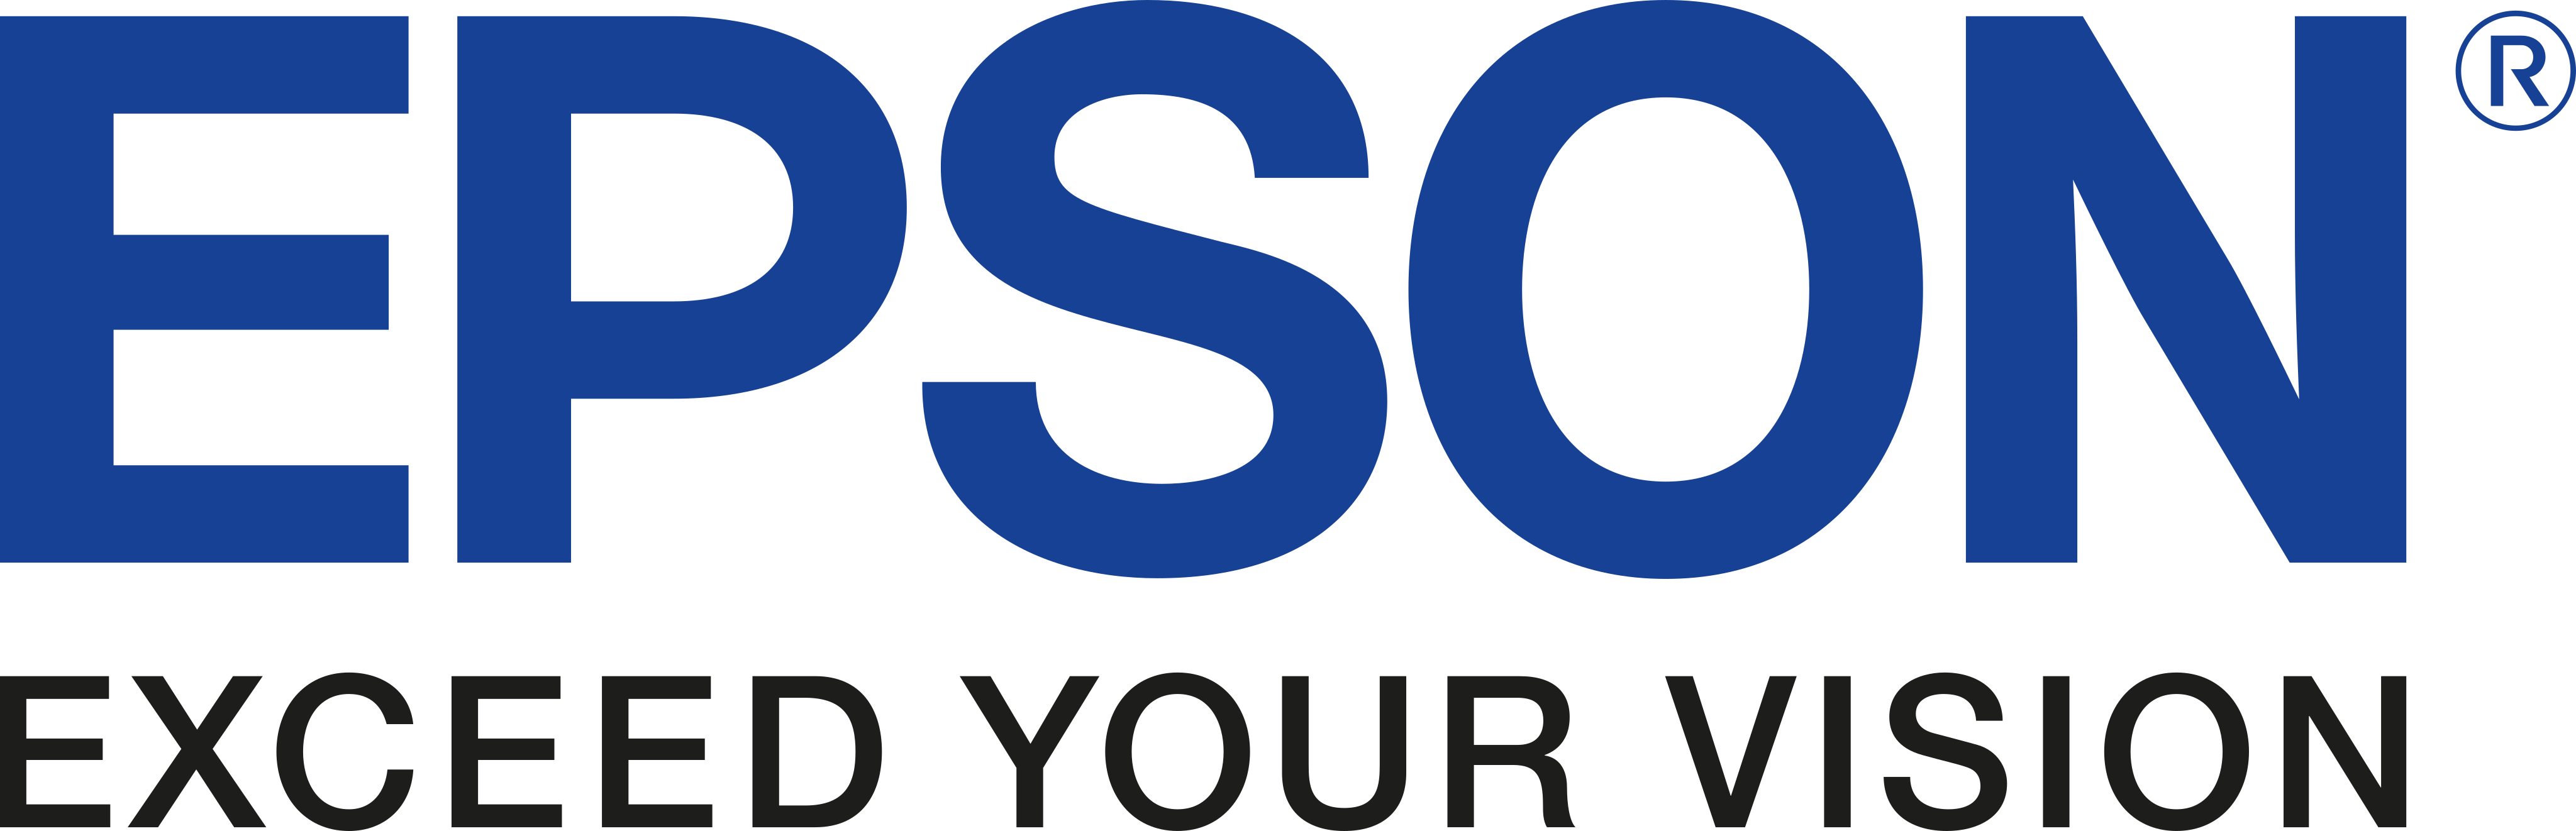 Epson Logo PNG - 179455